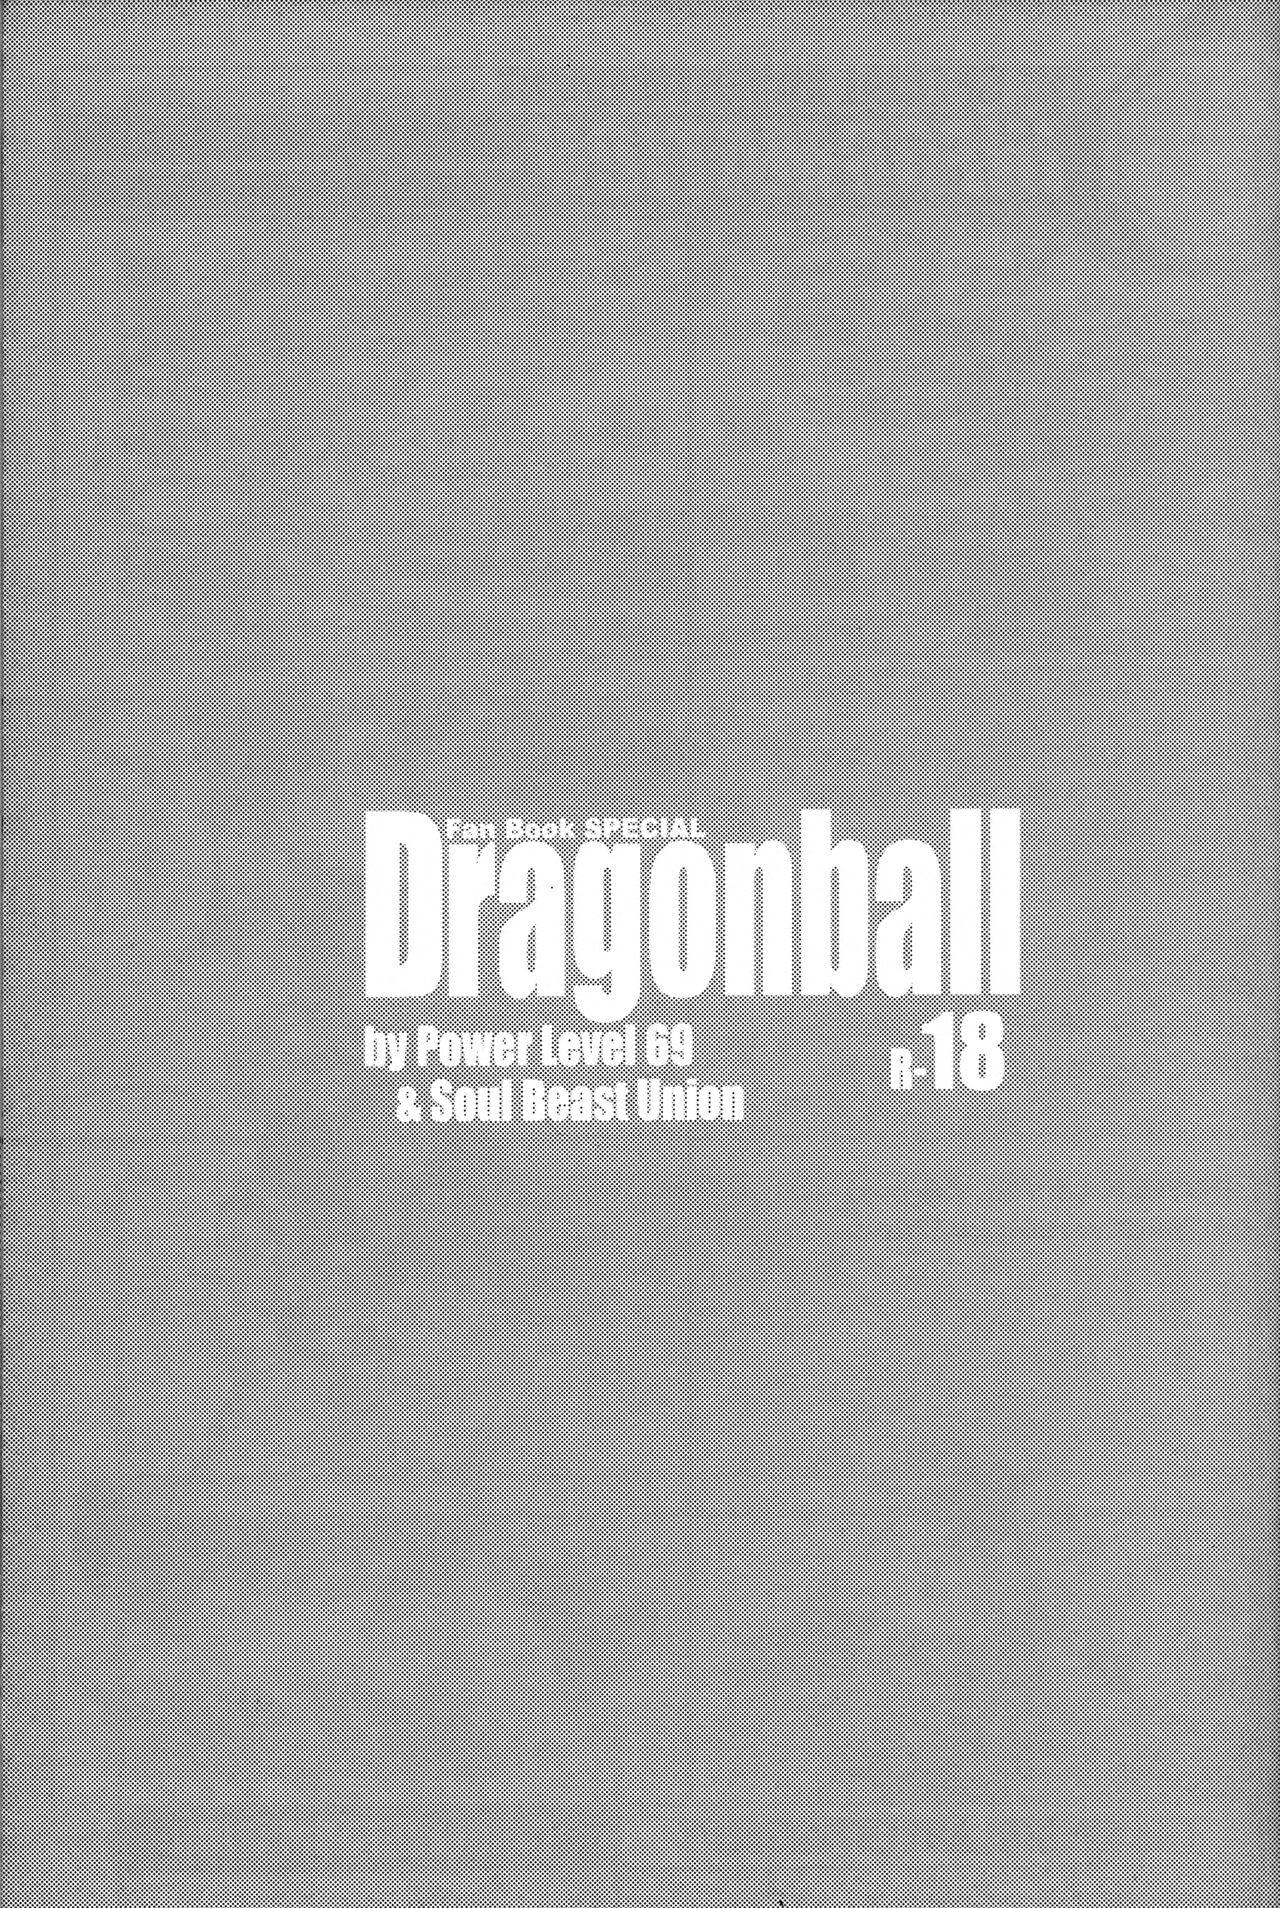 Olderwoman Dragonball Fan Book SPECIAL - Dragon ball z Cdmx - Page 4